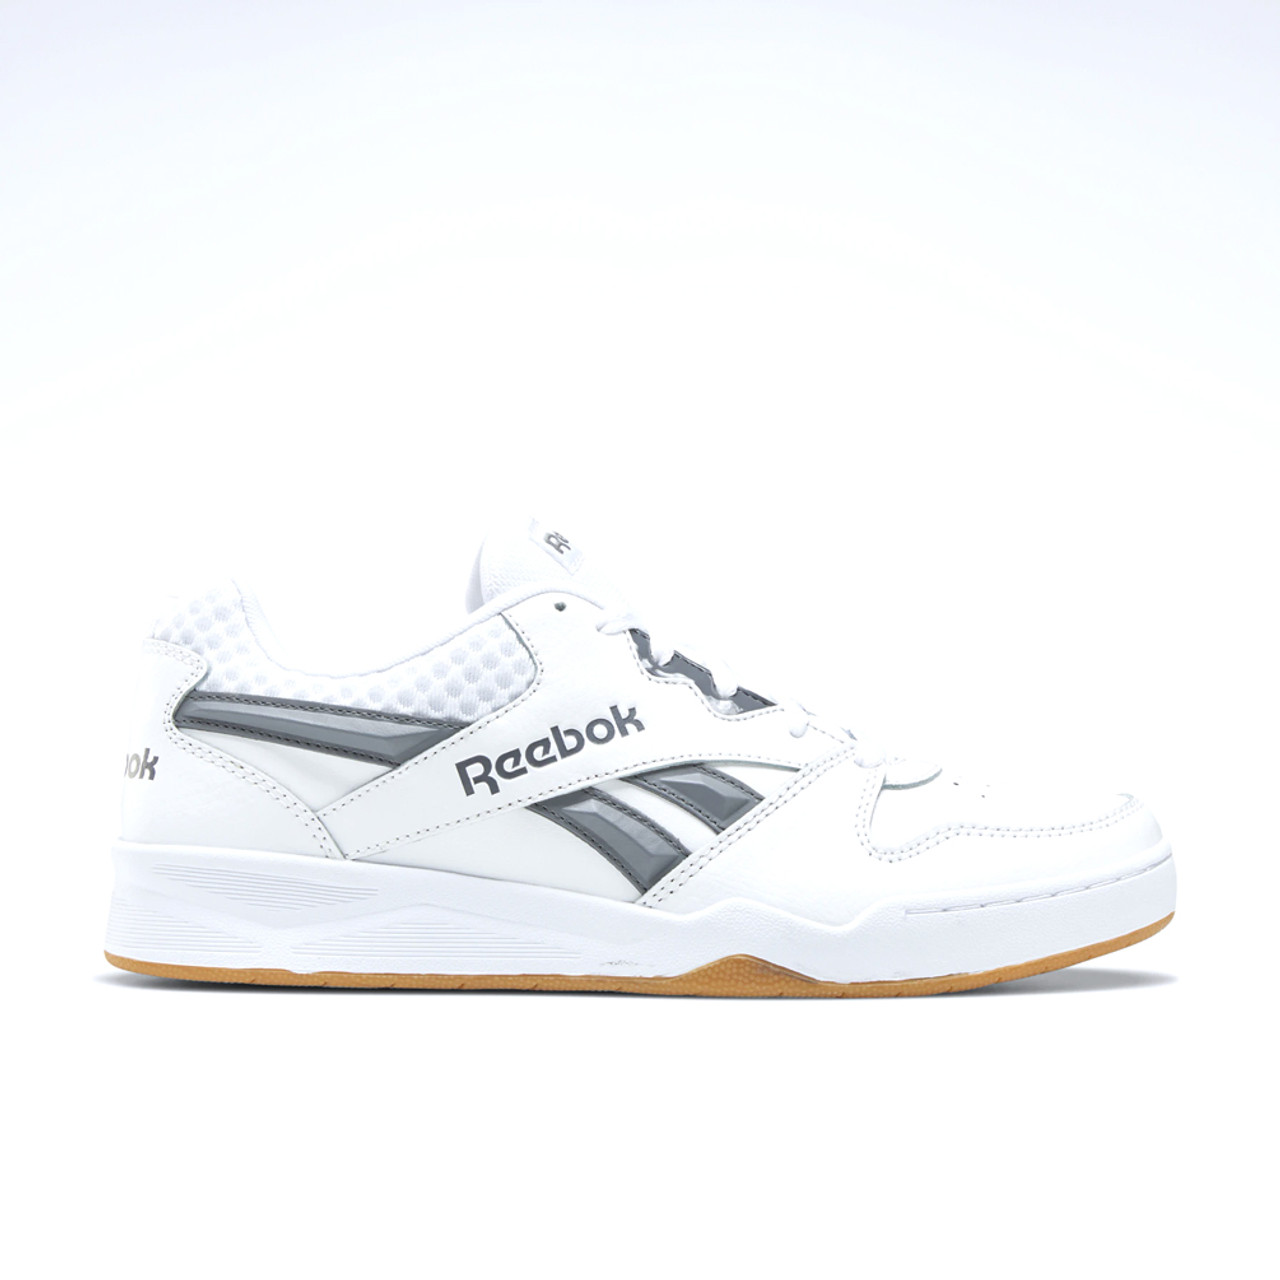 New Reebok Men's Royal BB4500 Low2 Sneaker White/Cold 6/Rubber Gum 7.5 - White/Cold Grey 6/Rubber Gum | Discount Reebok Mens Athletic & More - Shoolu.com | Shoolu.com